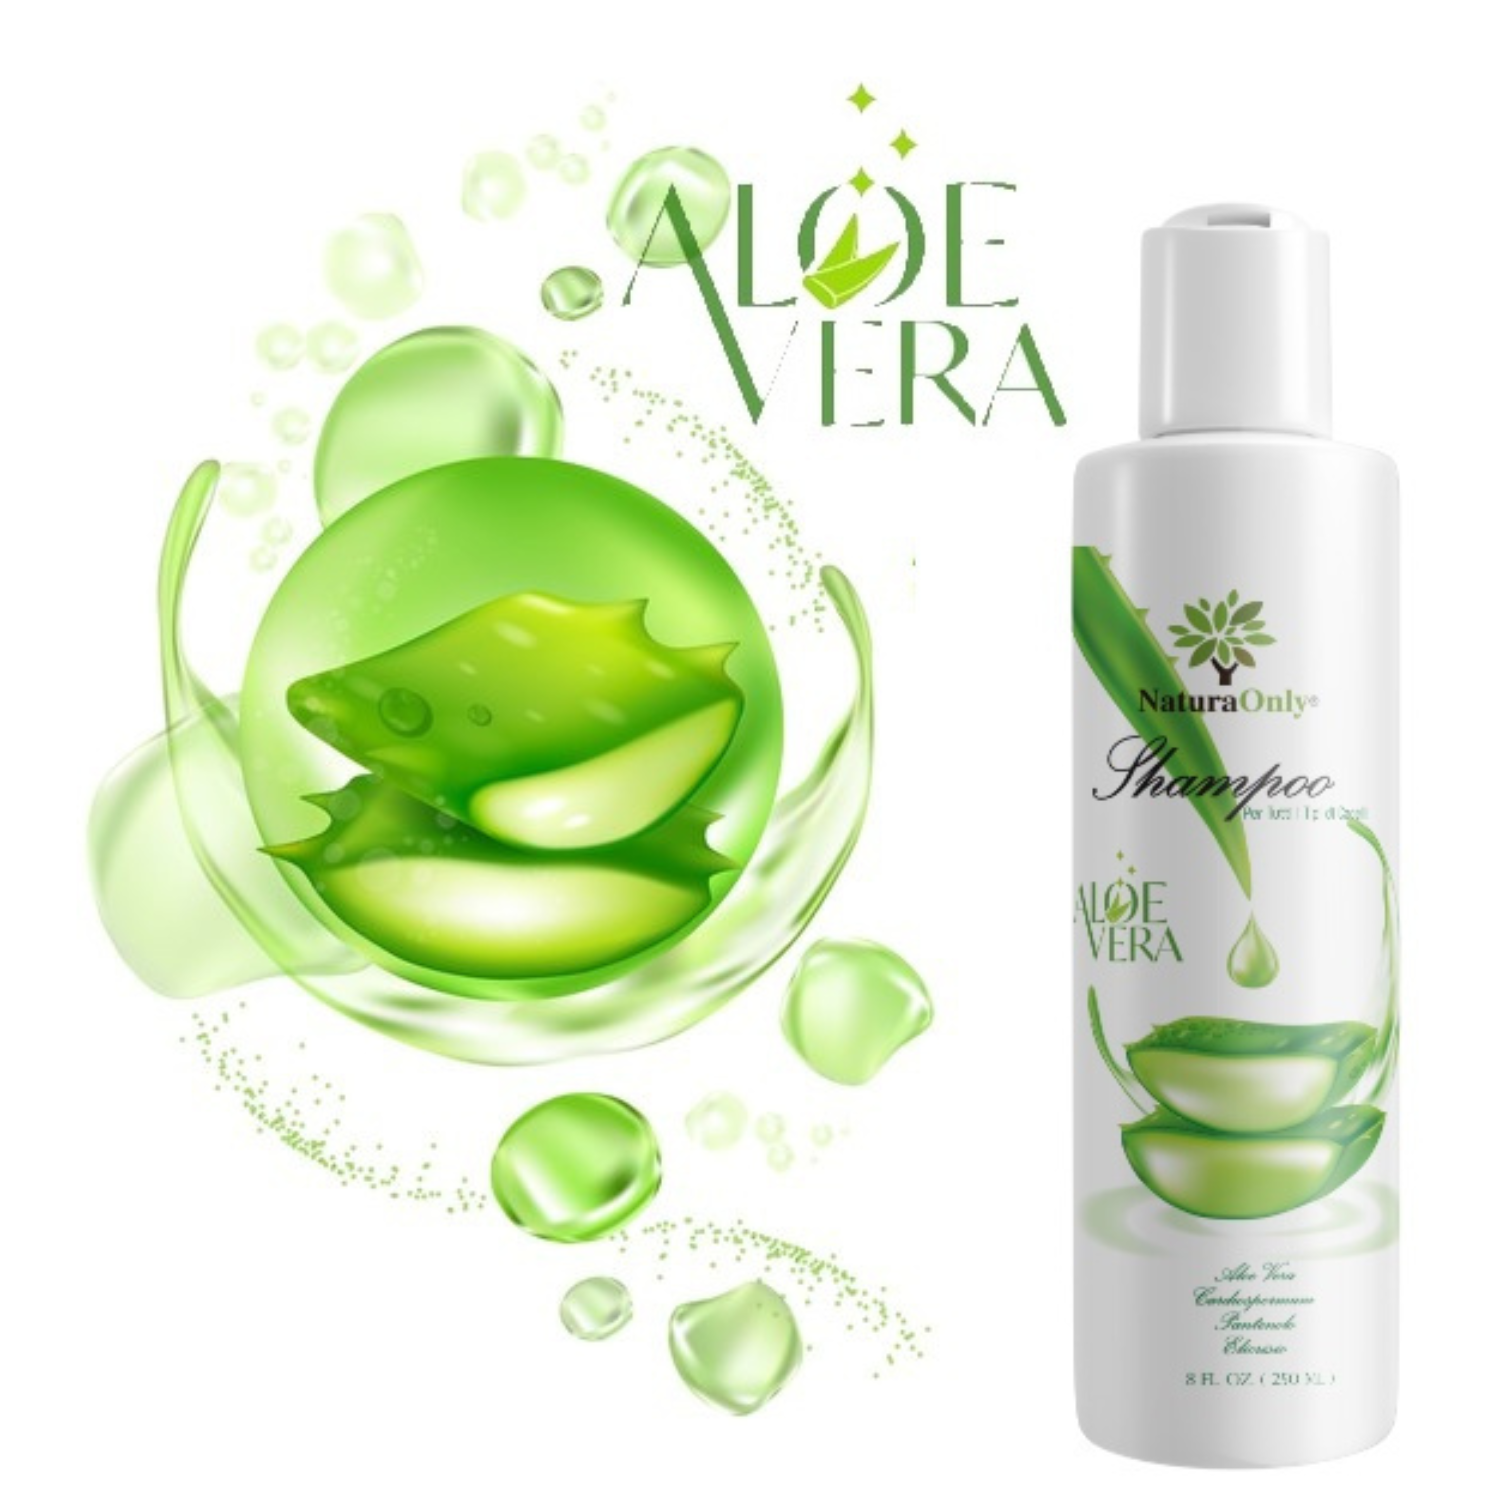 Set shampoo, mousse e crema Aloe Vera - Natura Only